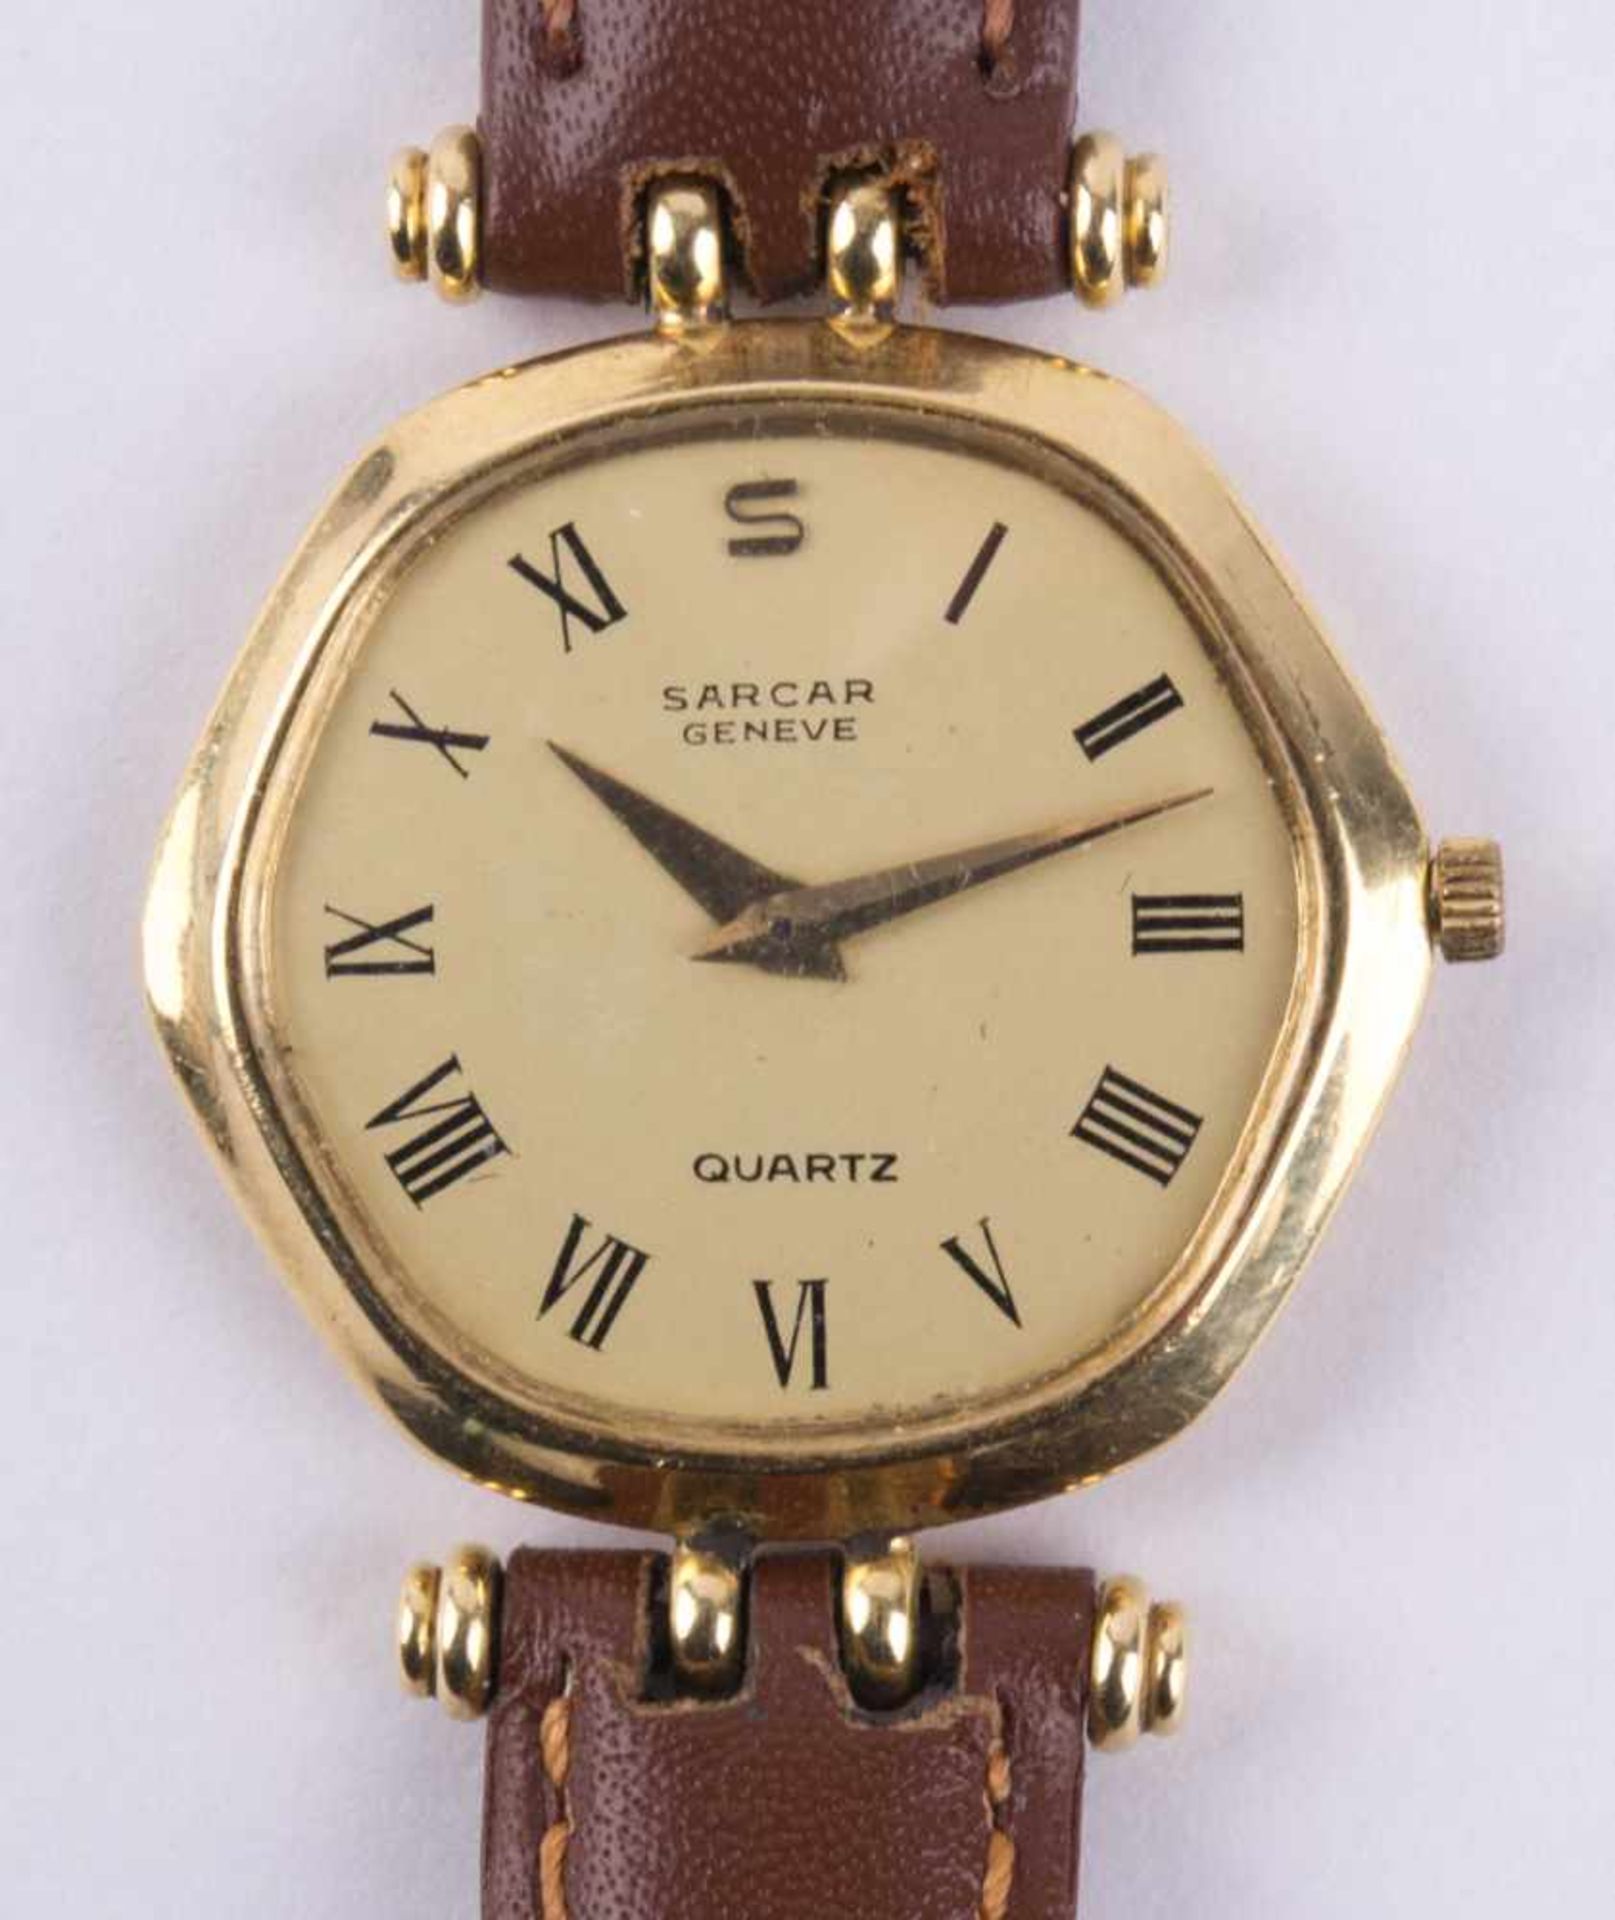 Damen Armbanduhr Sarcar Geneve / Women´s wristwatch GG 750/000, innen im Deckel punziert, Quarzwerk, - Image 3 of 5